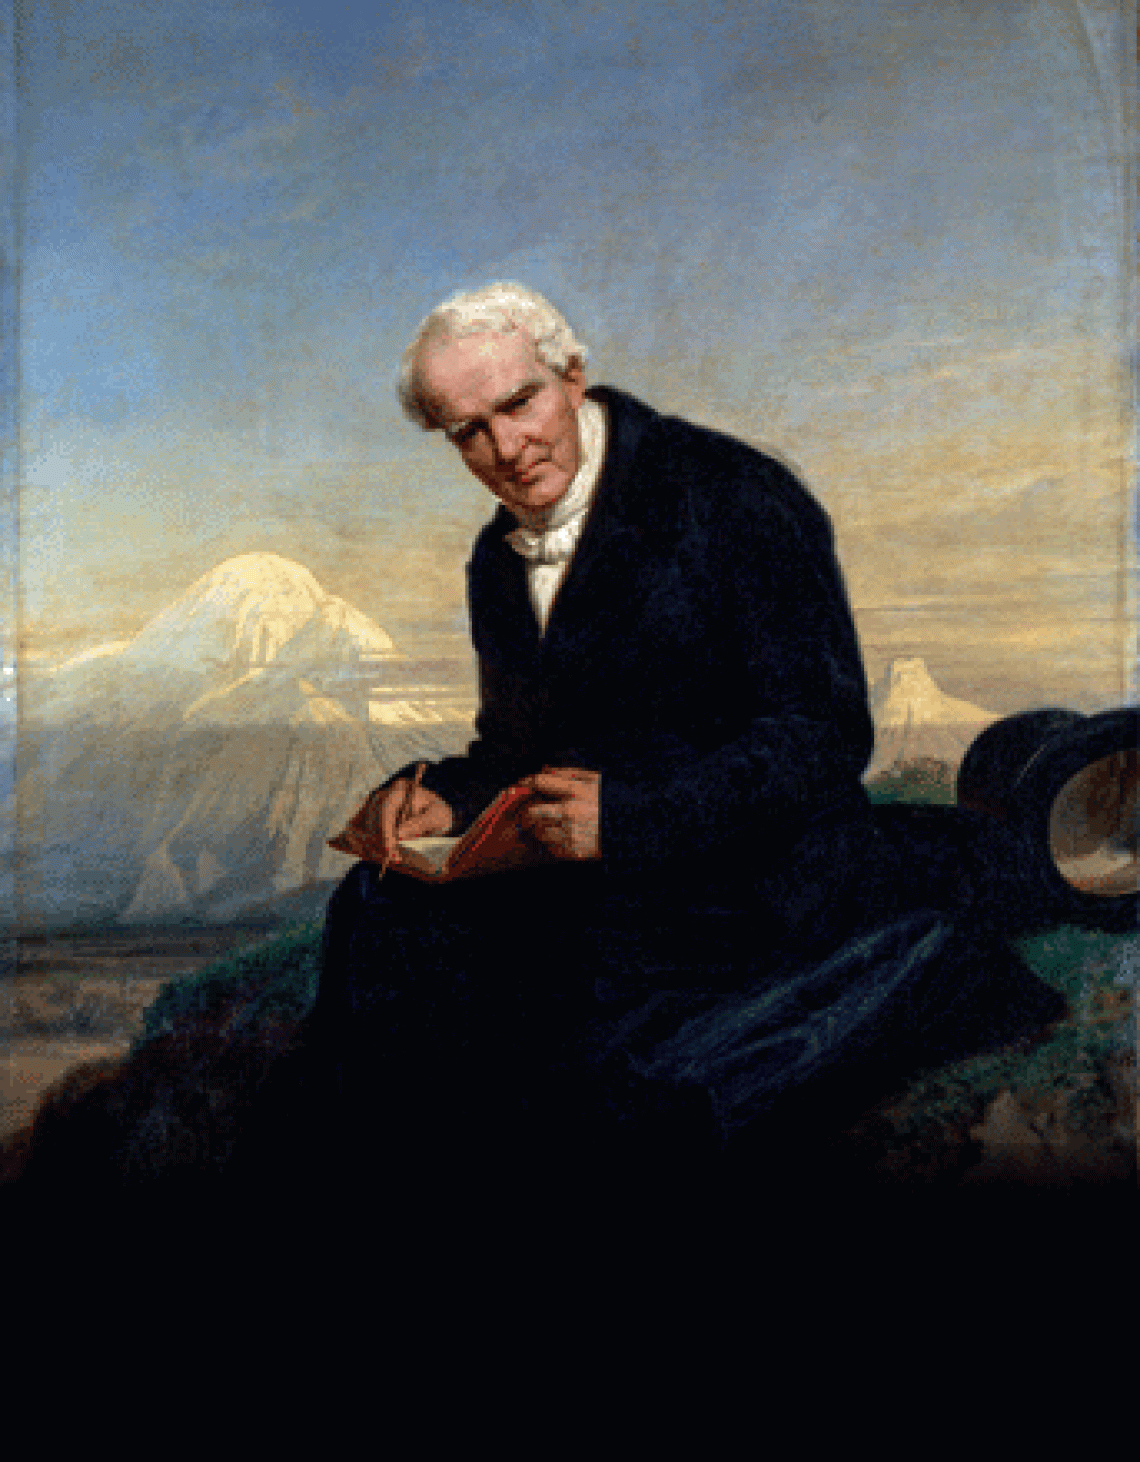 Painting of Alexander von Humboldt.